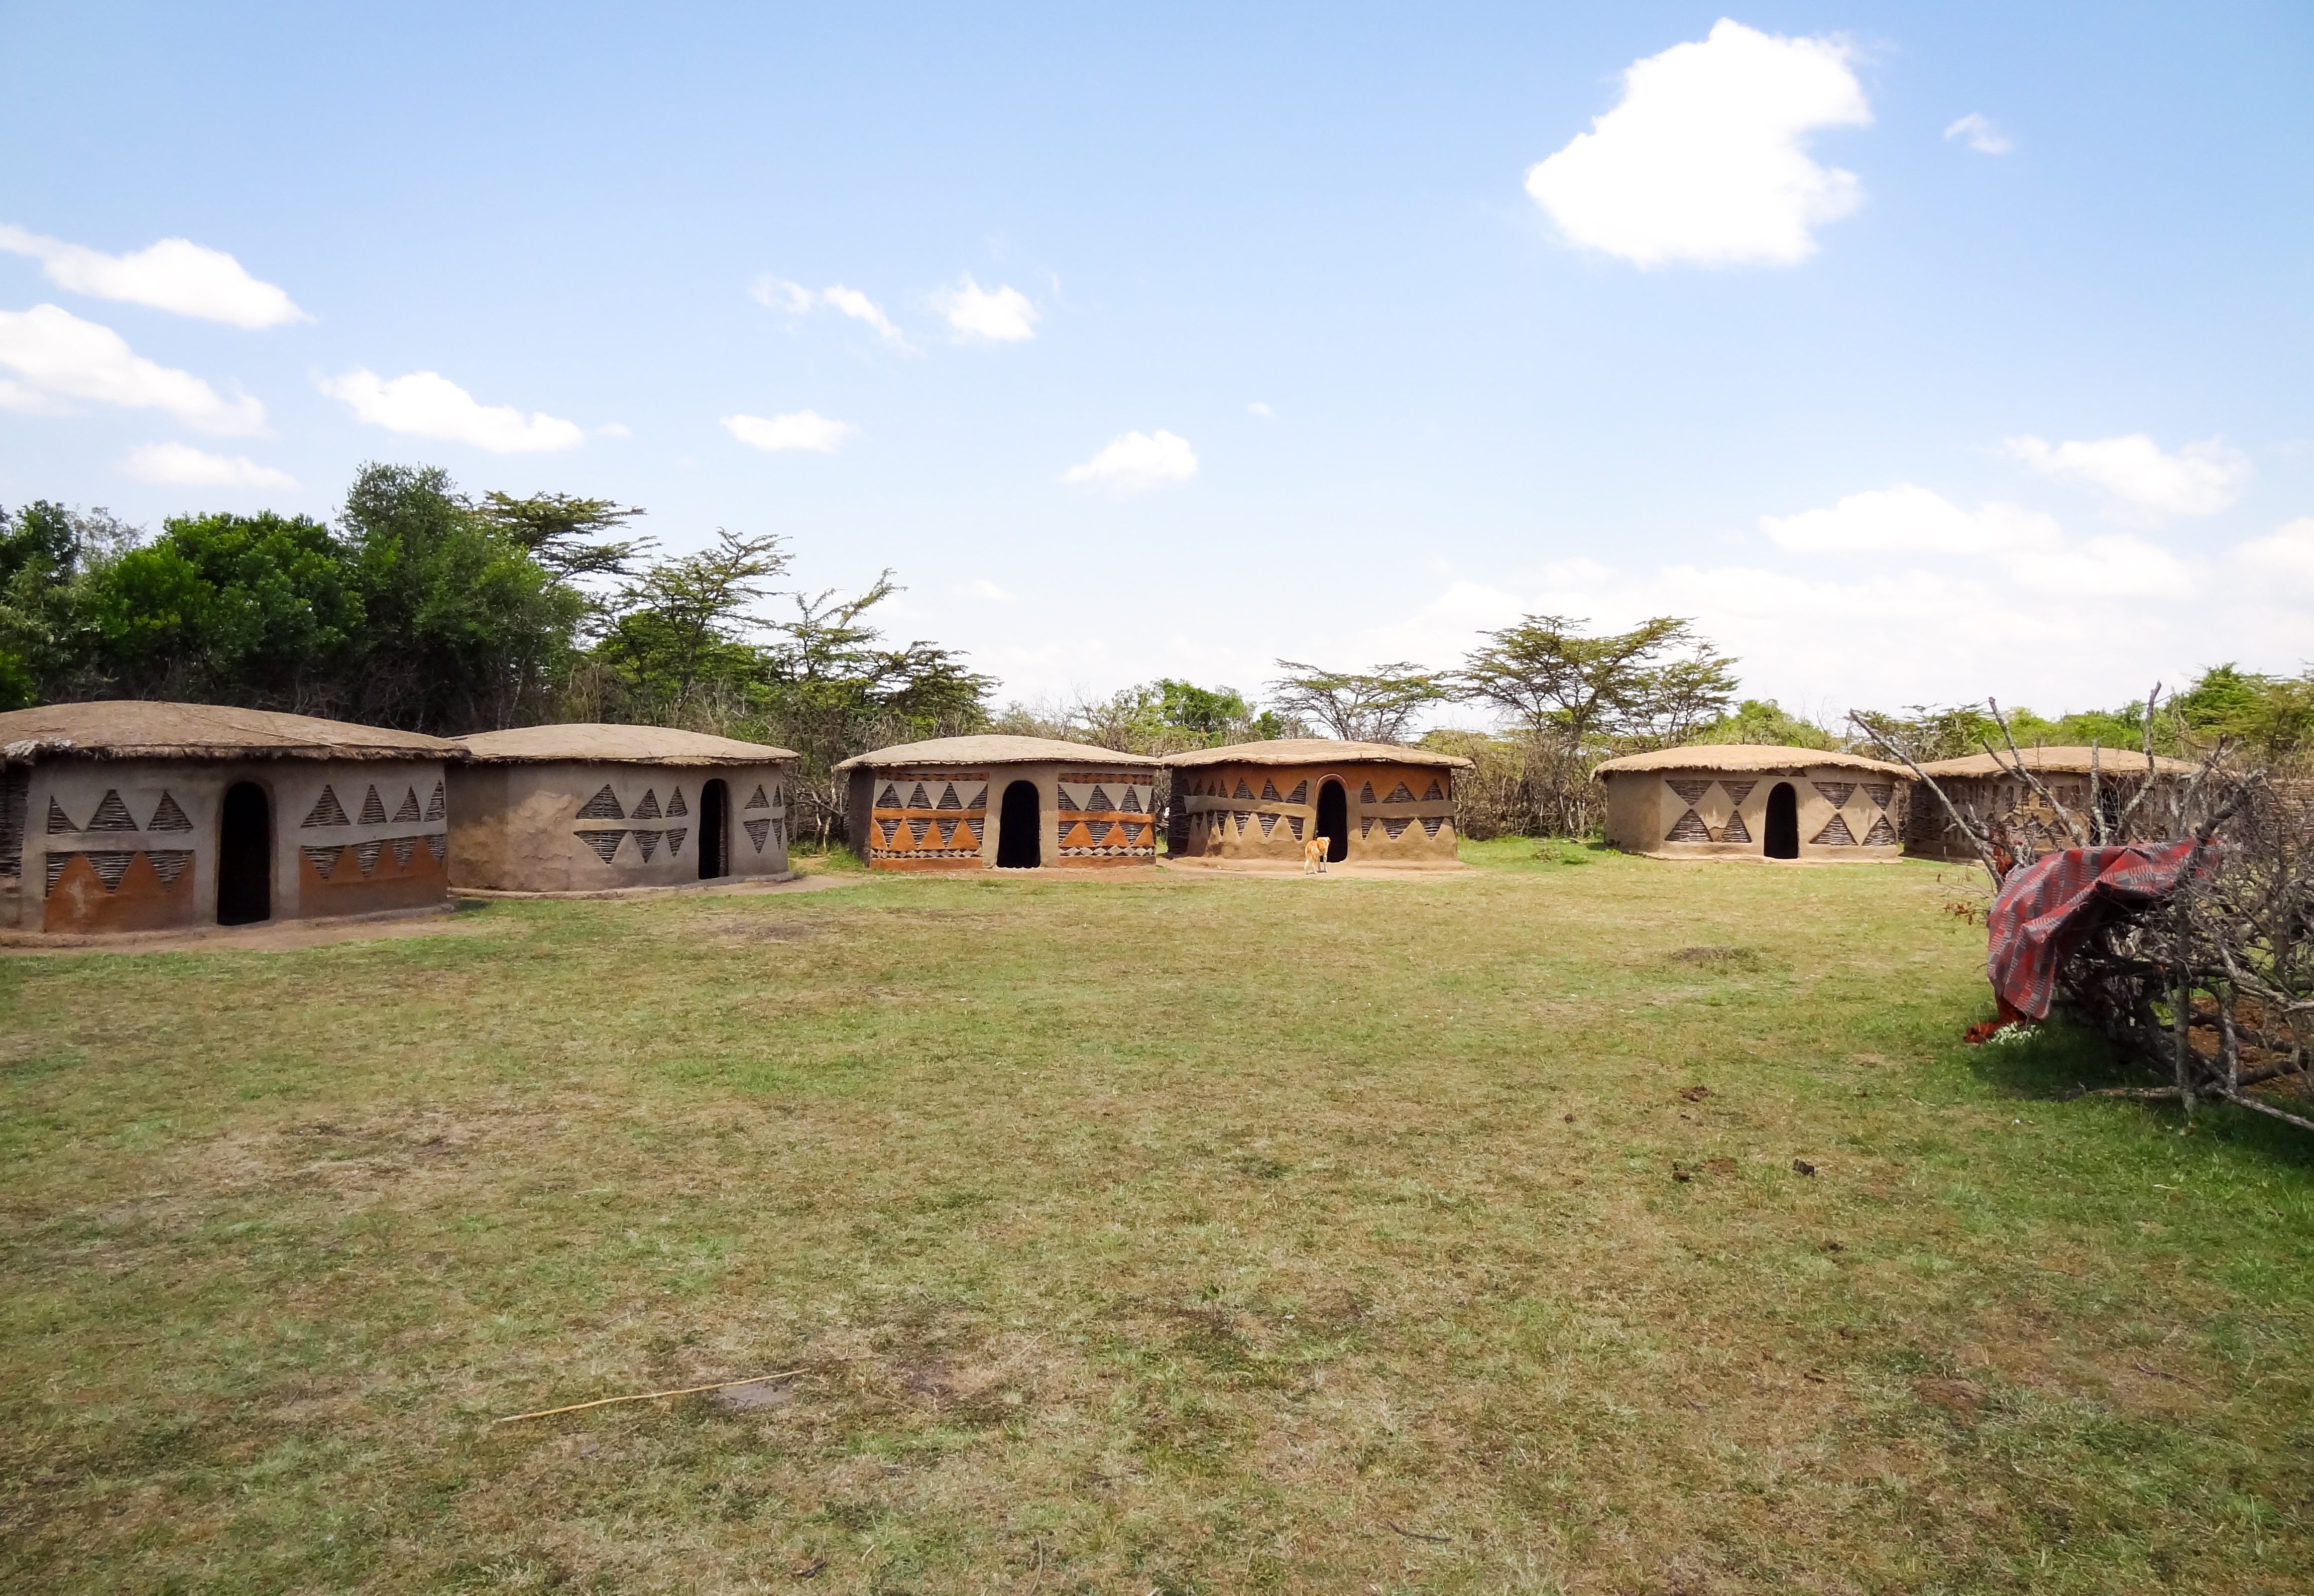 Community latrines constructed in Mpata, Kirindon, Kenya in 2014. ©World Vision